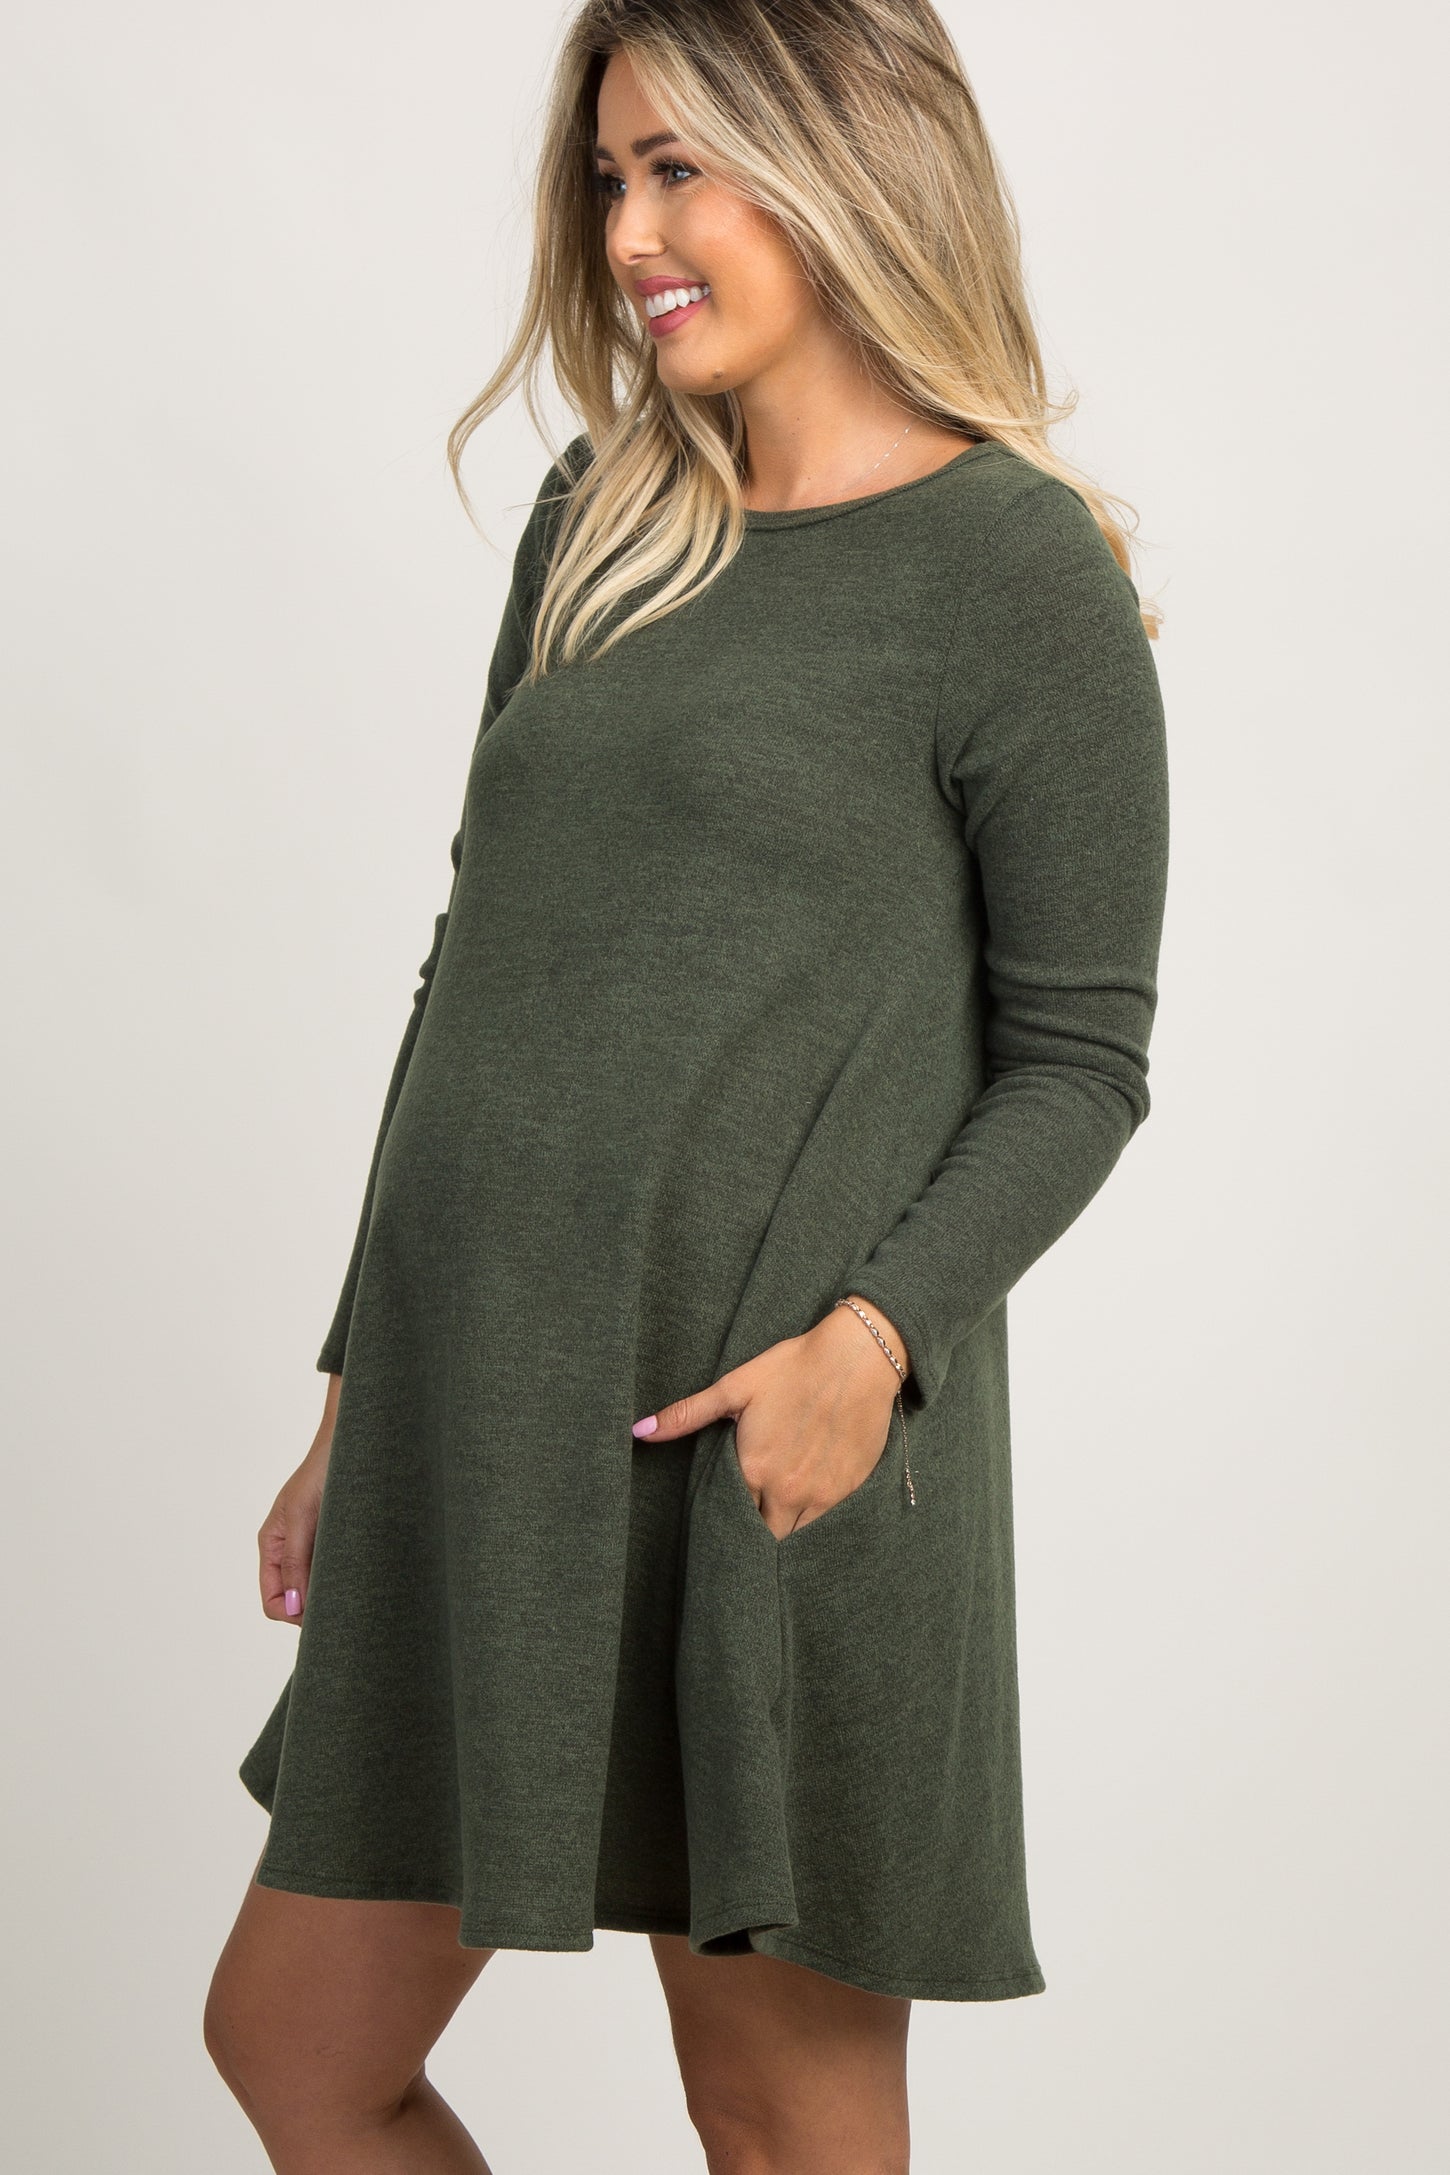 Olive Green Basic Knit Maternity Swing Dress